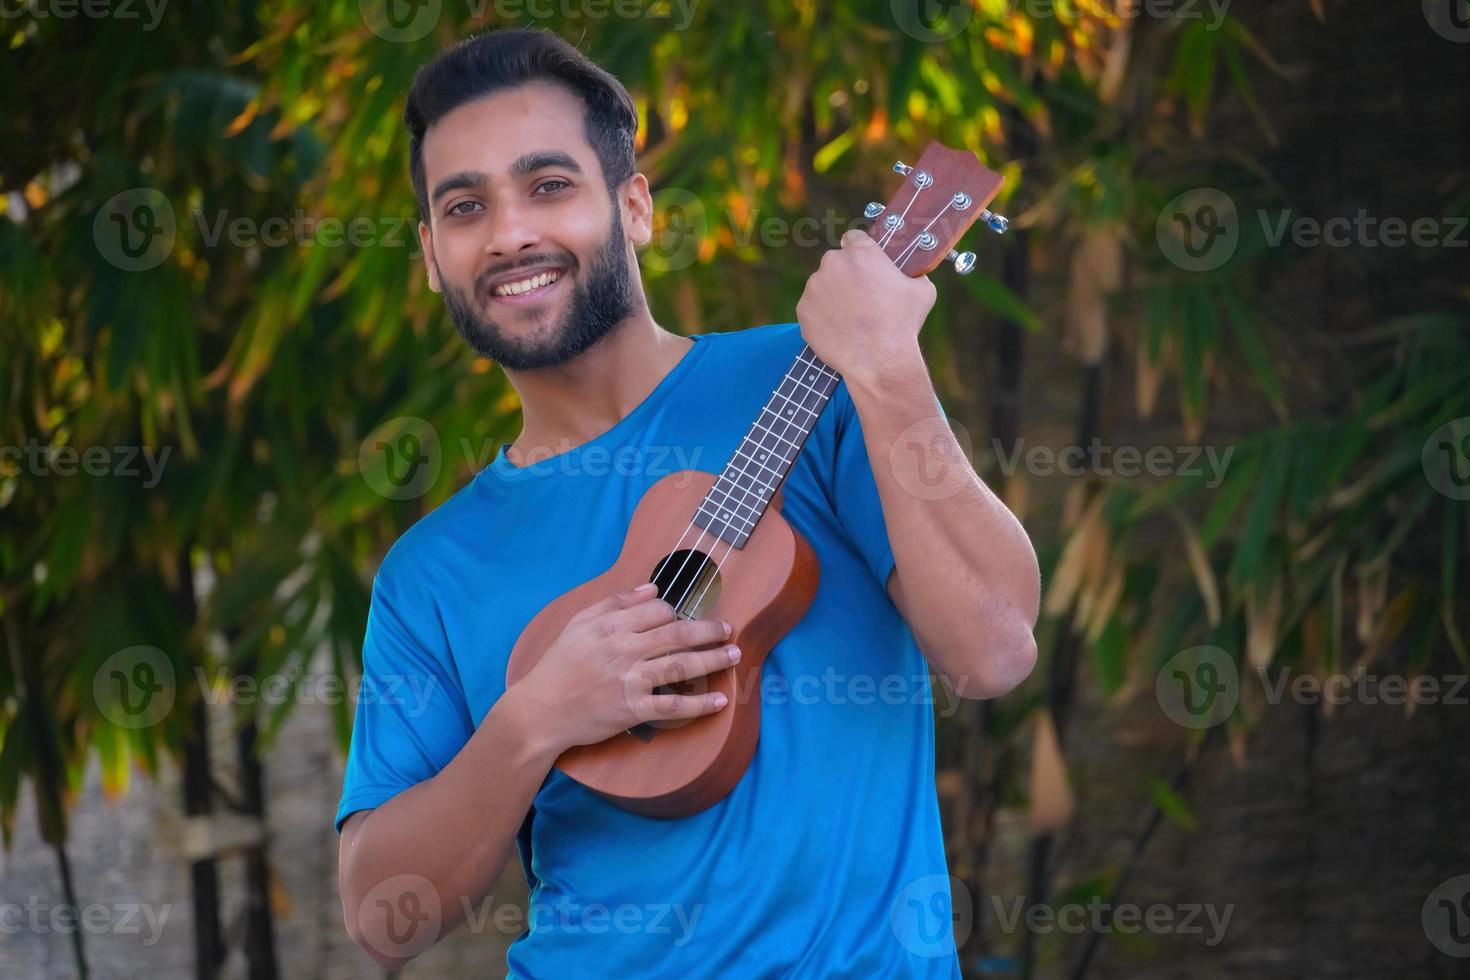 niño con ukelele un instrumento musical imagen de músico indio guapo foto